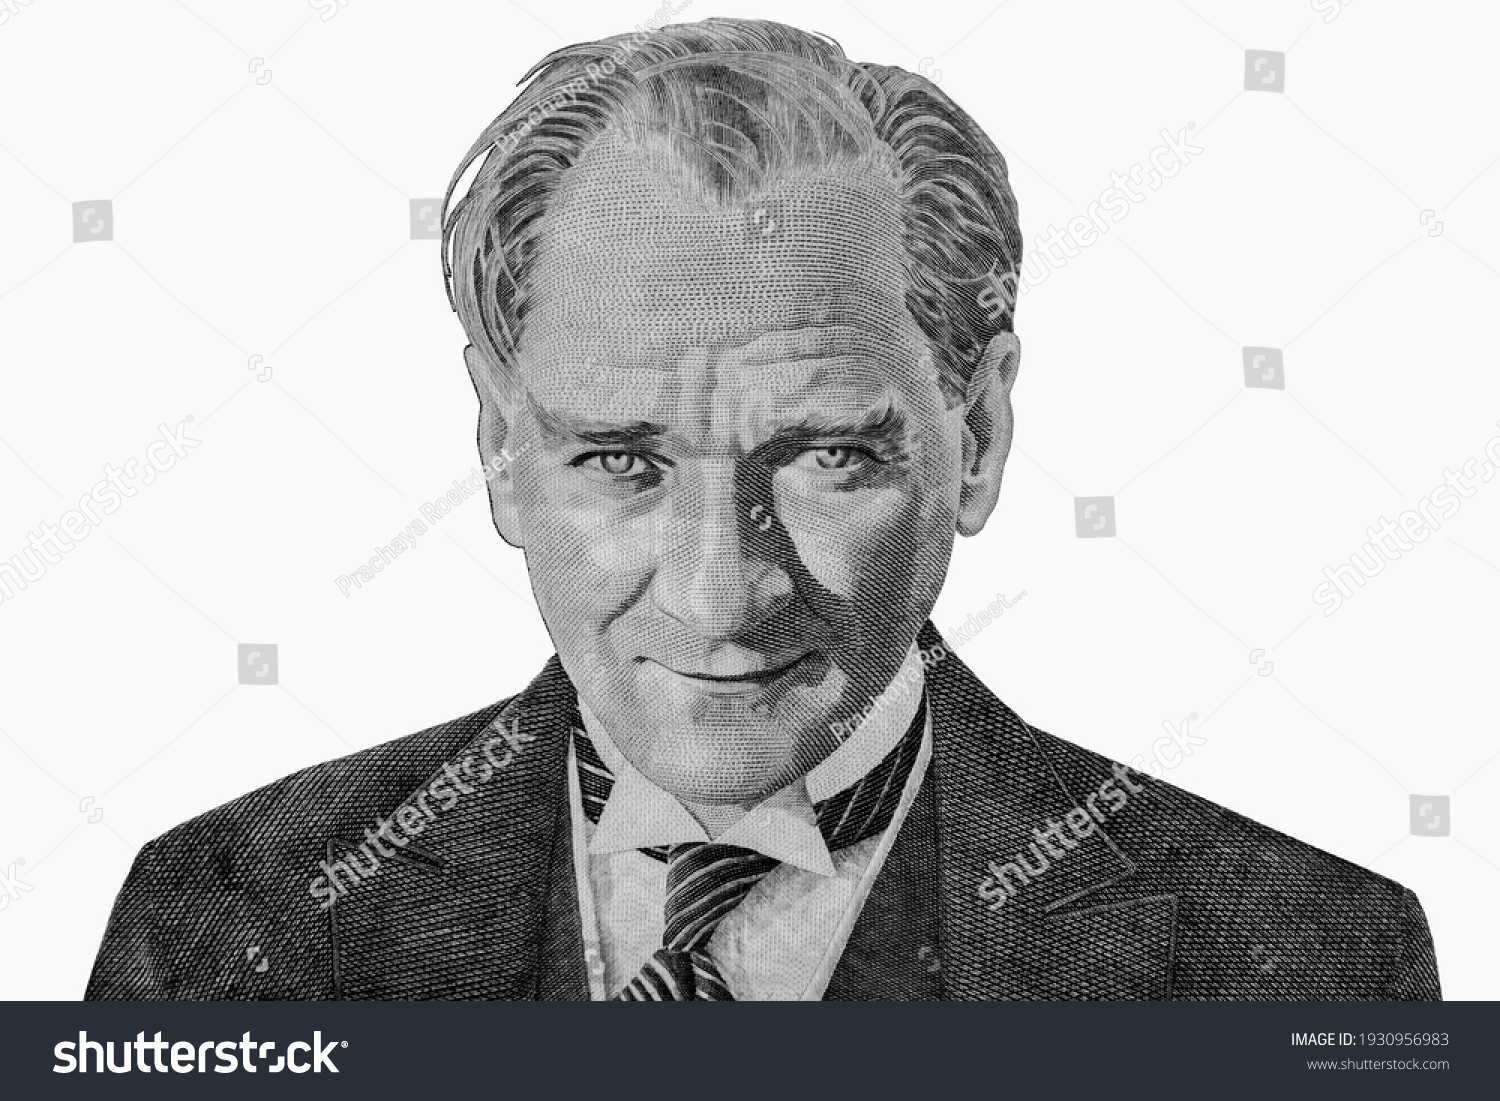 Mustafa Kemal Ataturk. Portrait of the first President of Turkey. #1930956983